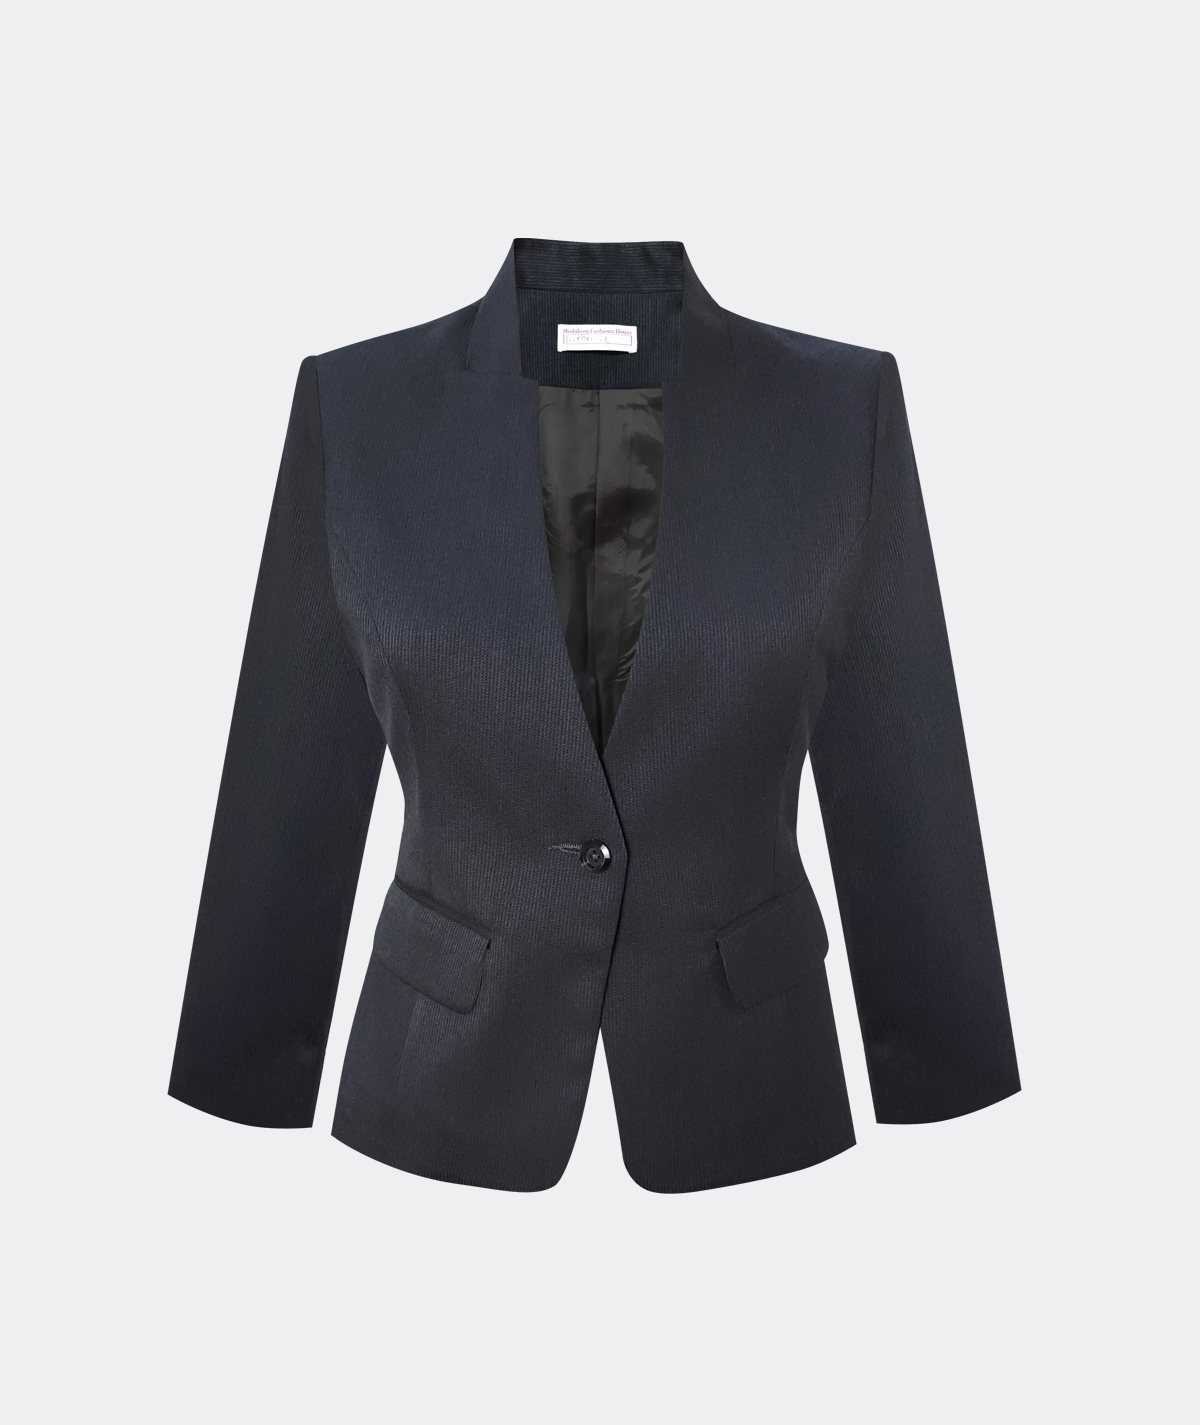 front-office-mandarin collar-jacket-uniform-stand-collar-jacket-bank-uniform